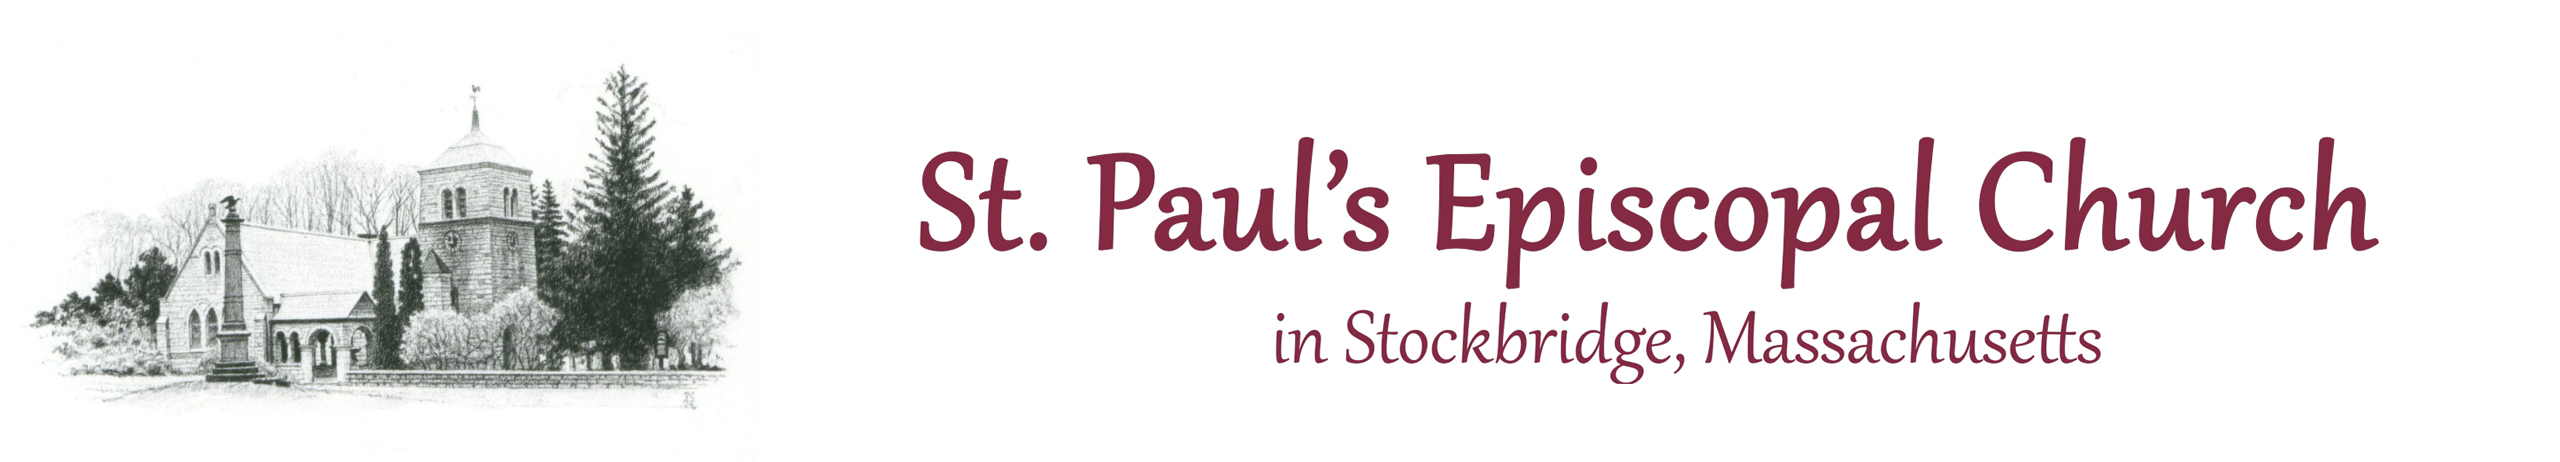 St Pauls Episcopal Church in Stockbridge, MA